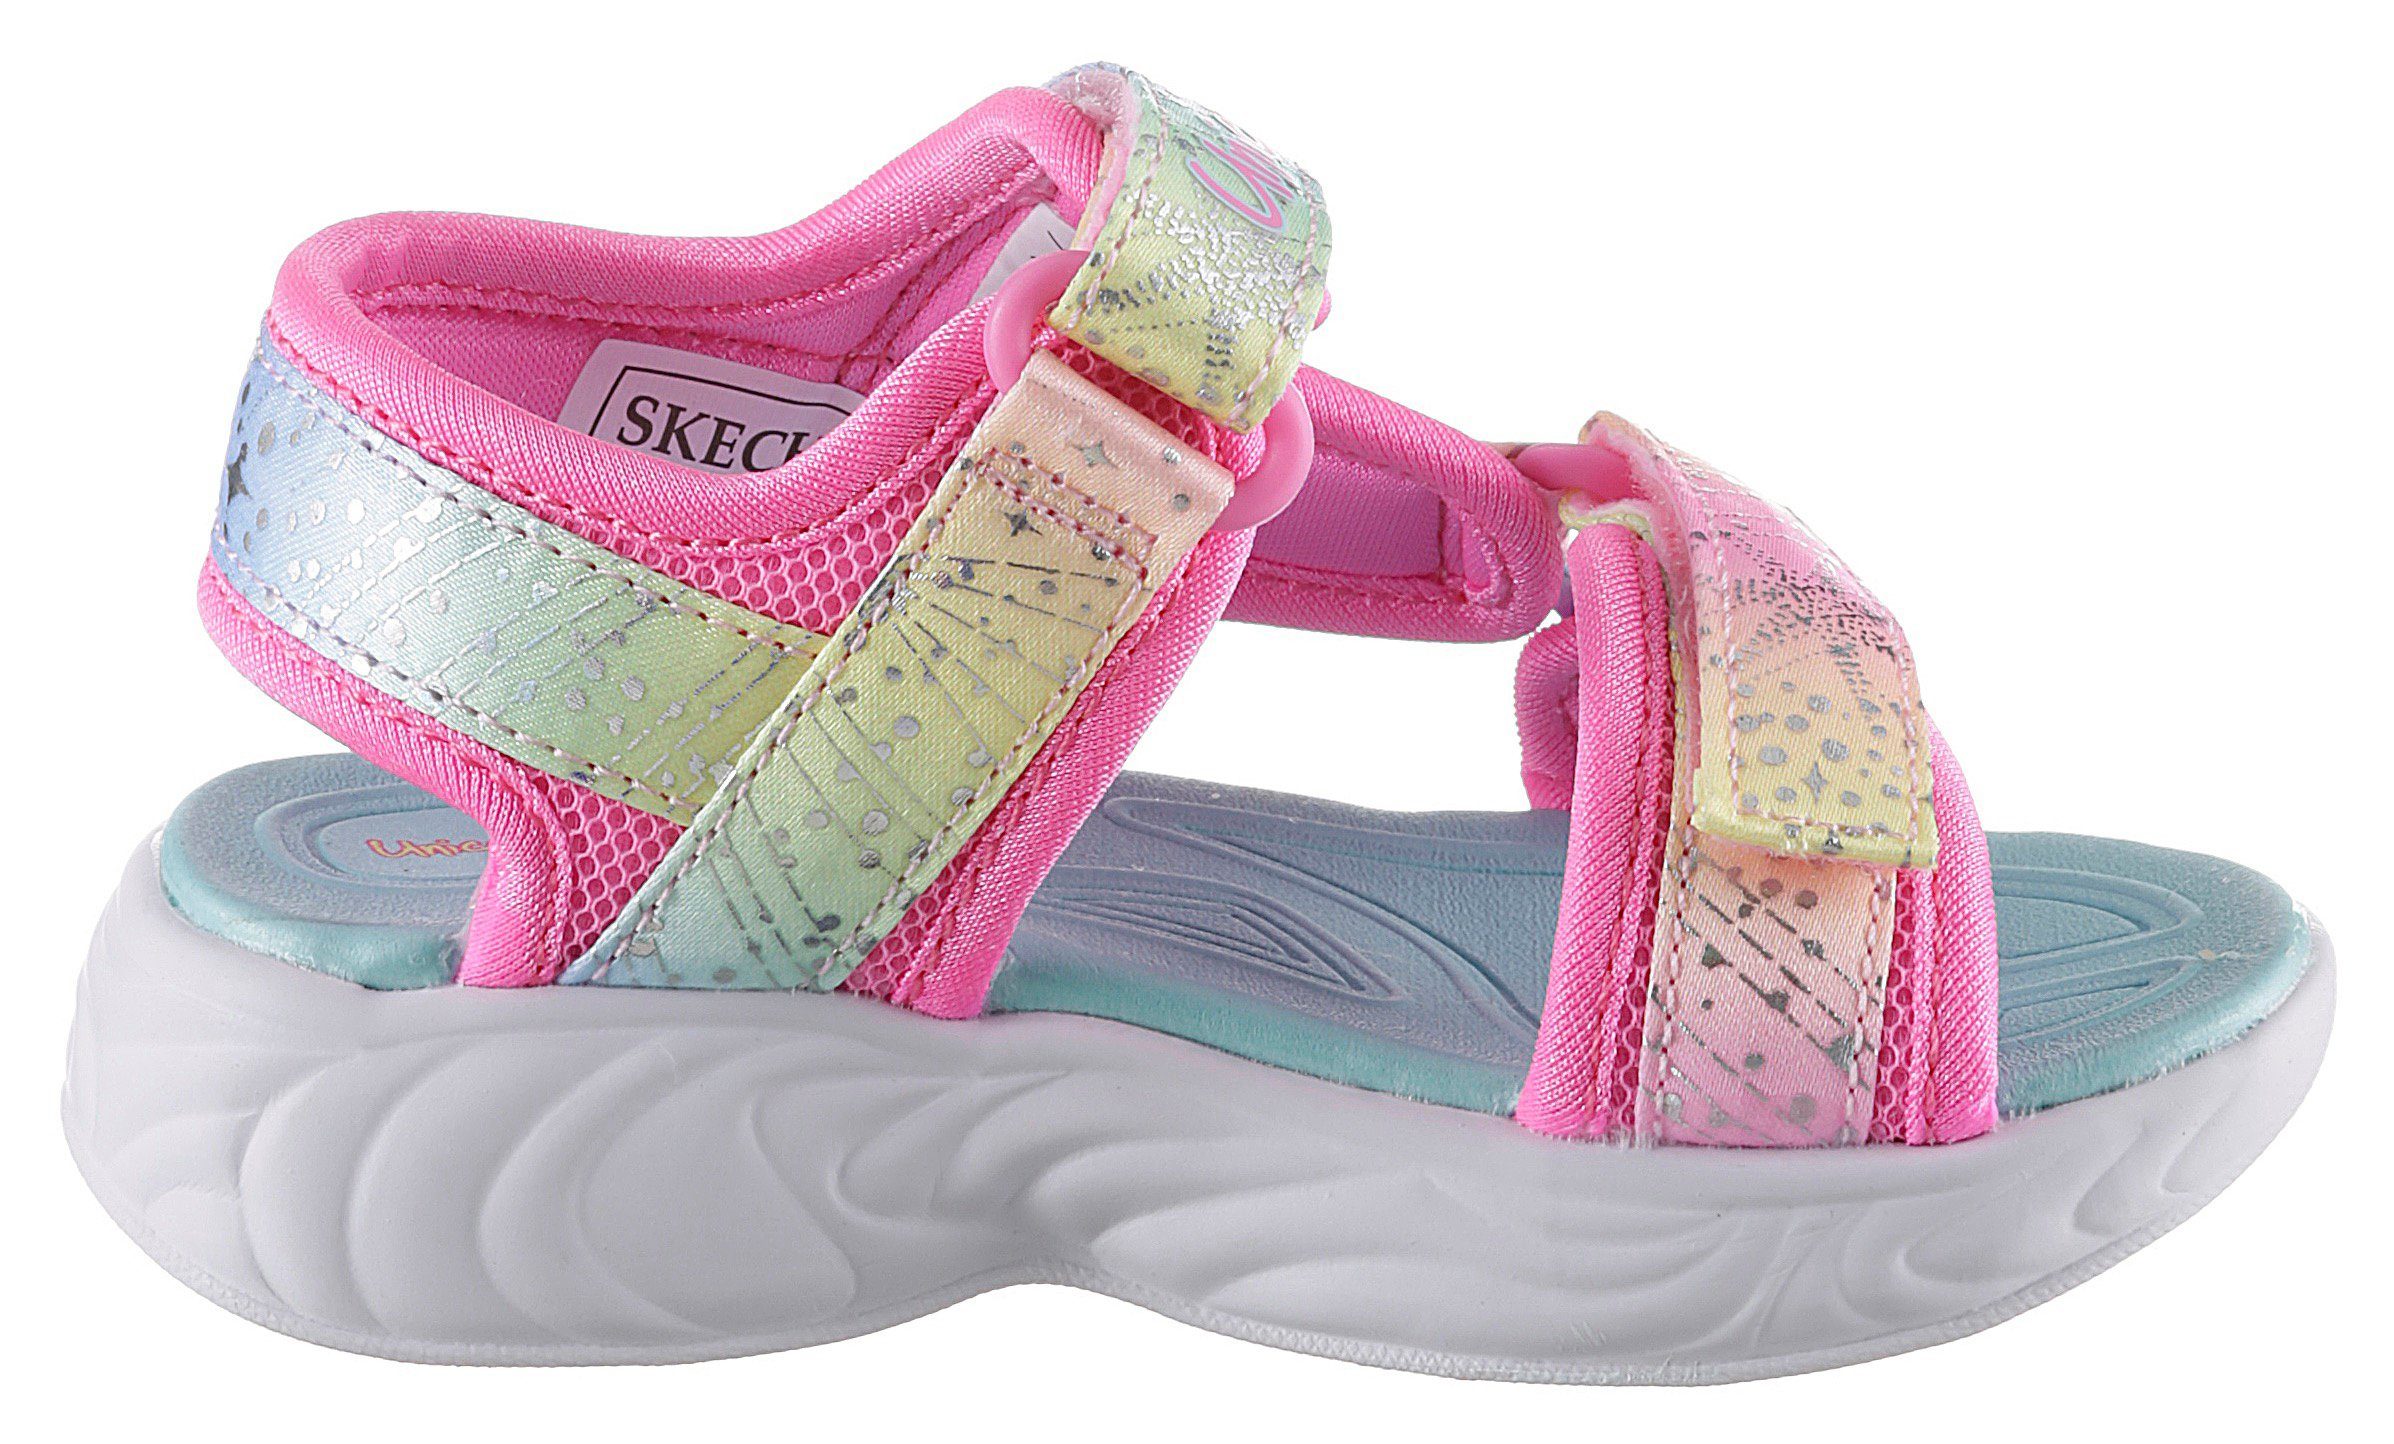 Skechers Kids leuchtet UNICORN MAJESTIC SANDAL pink-kombiniert bei DREAMS jedem Sandale BLISS Schritt